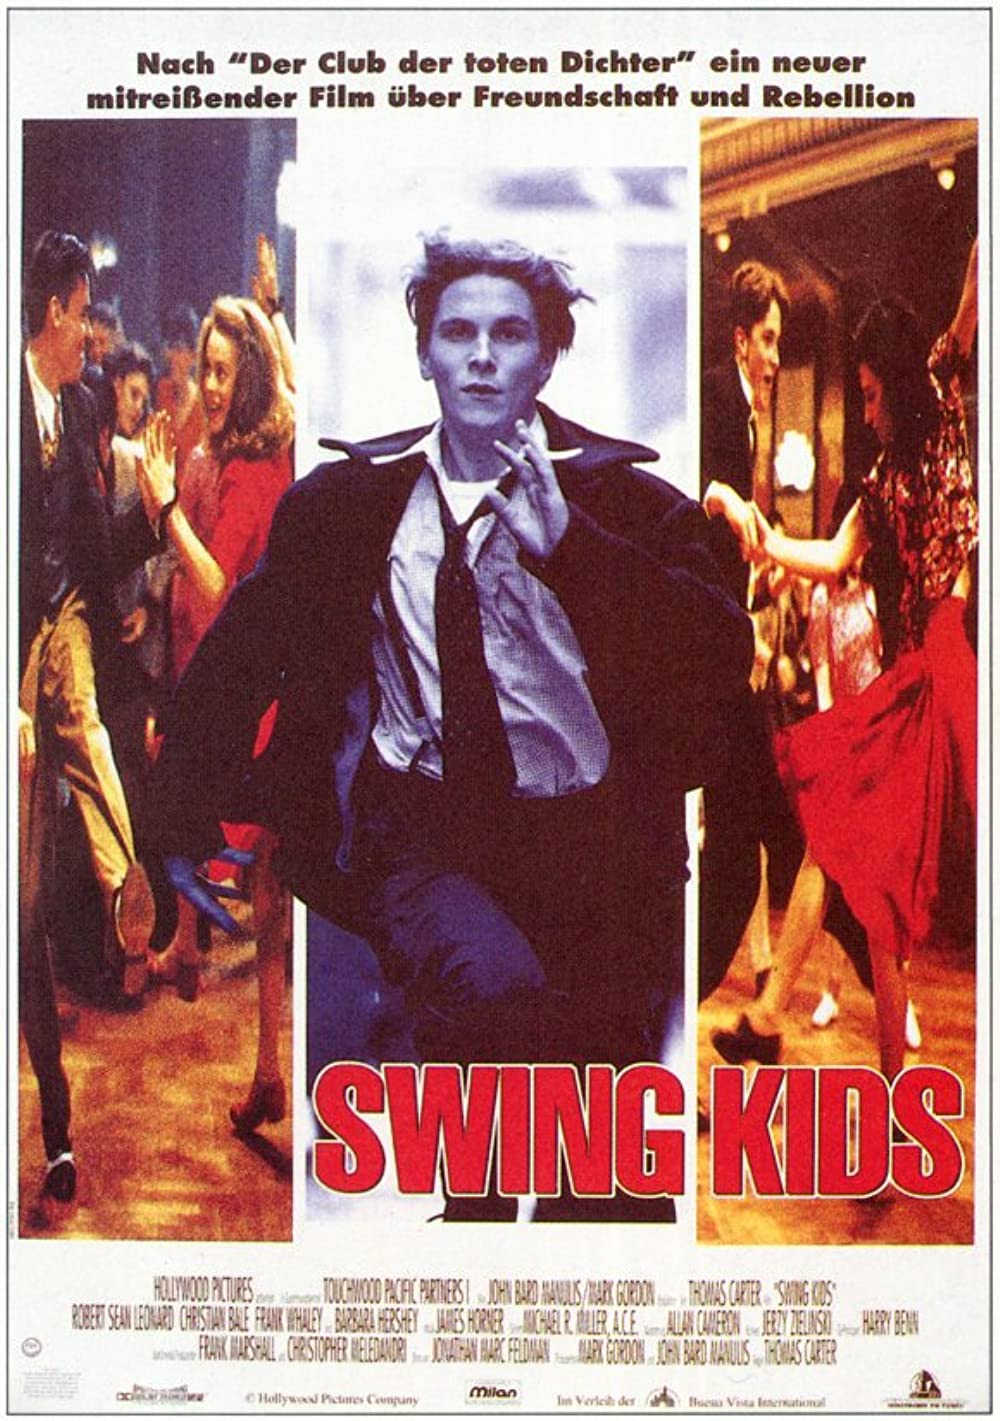 Filmbeschreibung zu Swing Kids